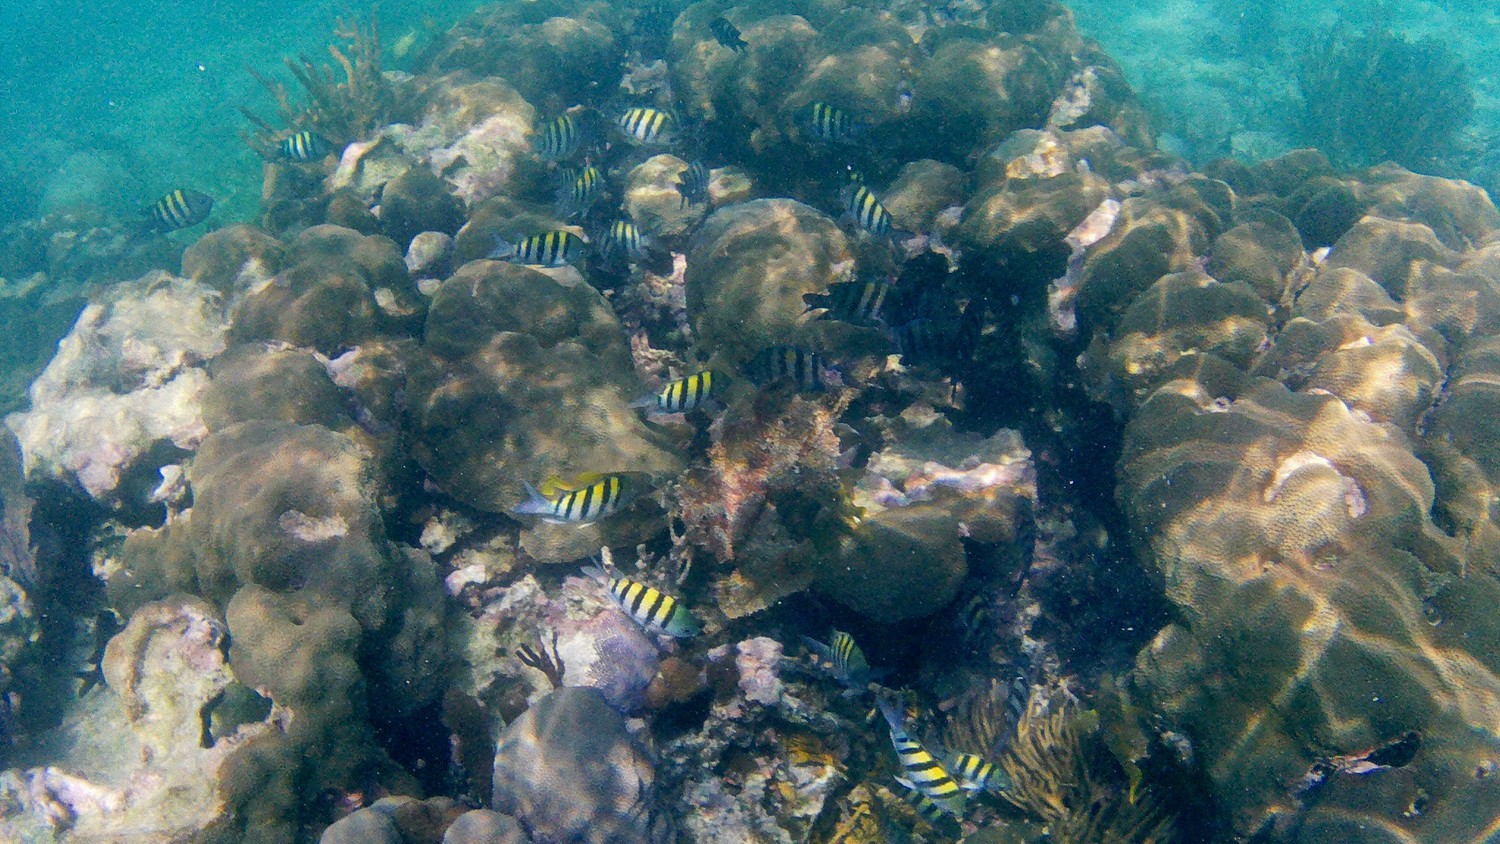 School of zebra fish